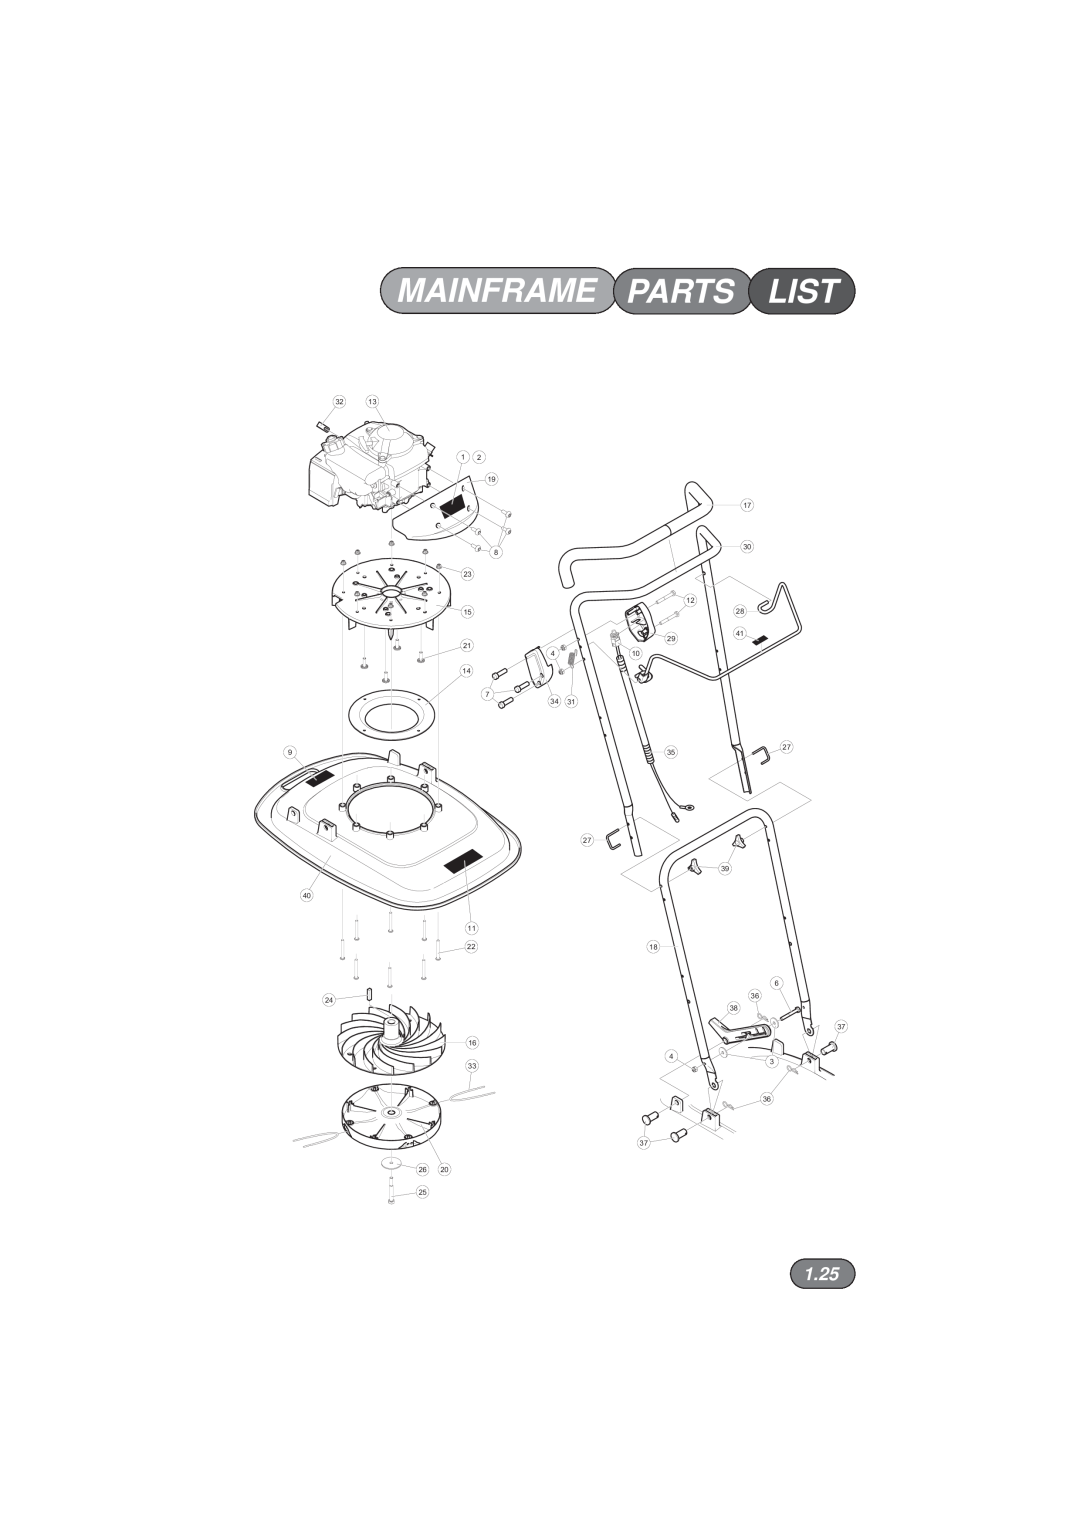 Hayter Mowers 184E XR44, 185E XR16 manual Mainframe Parts List, 1.25 